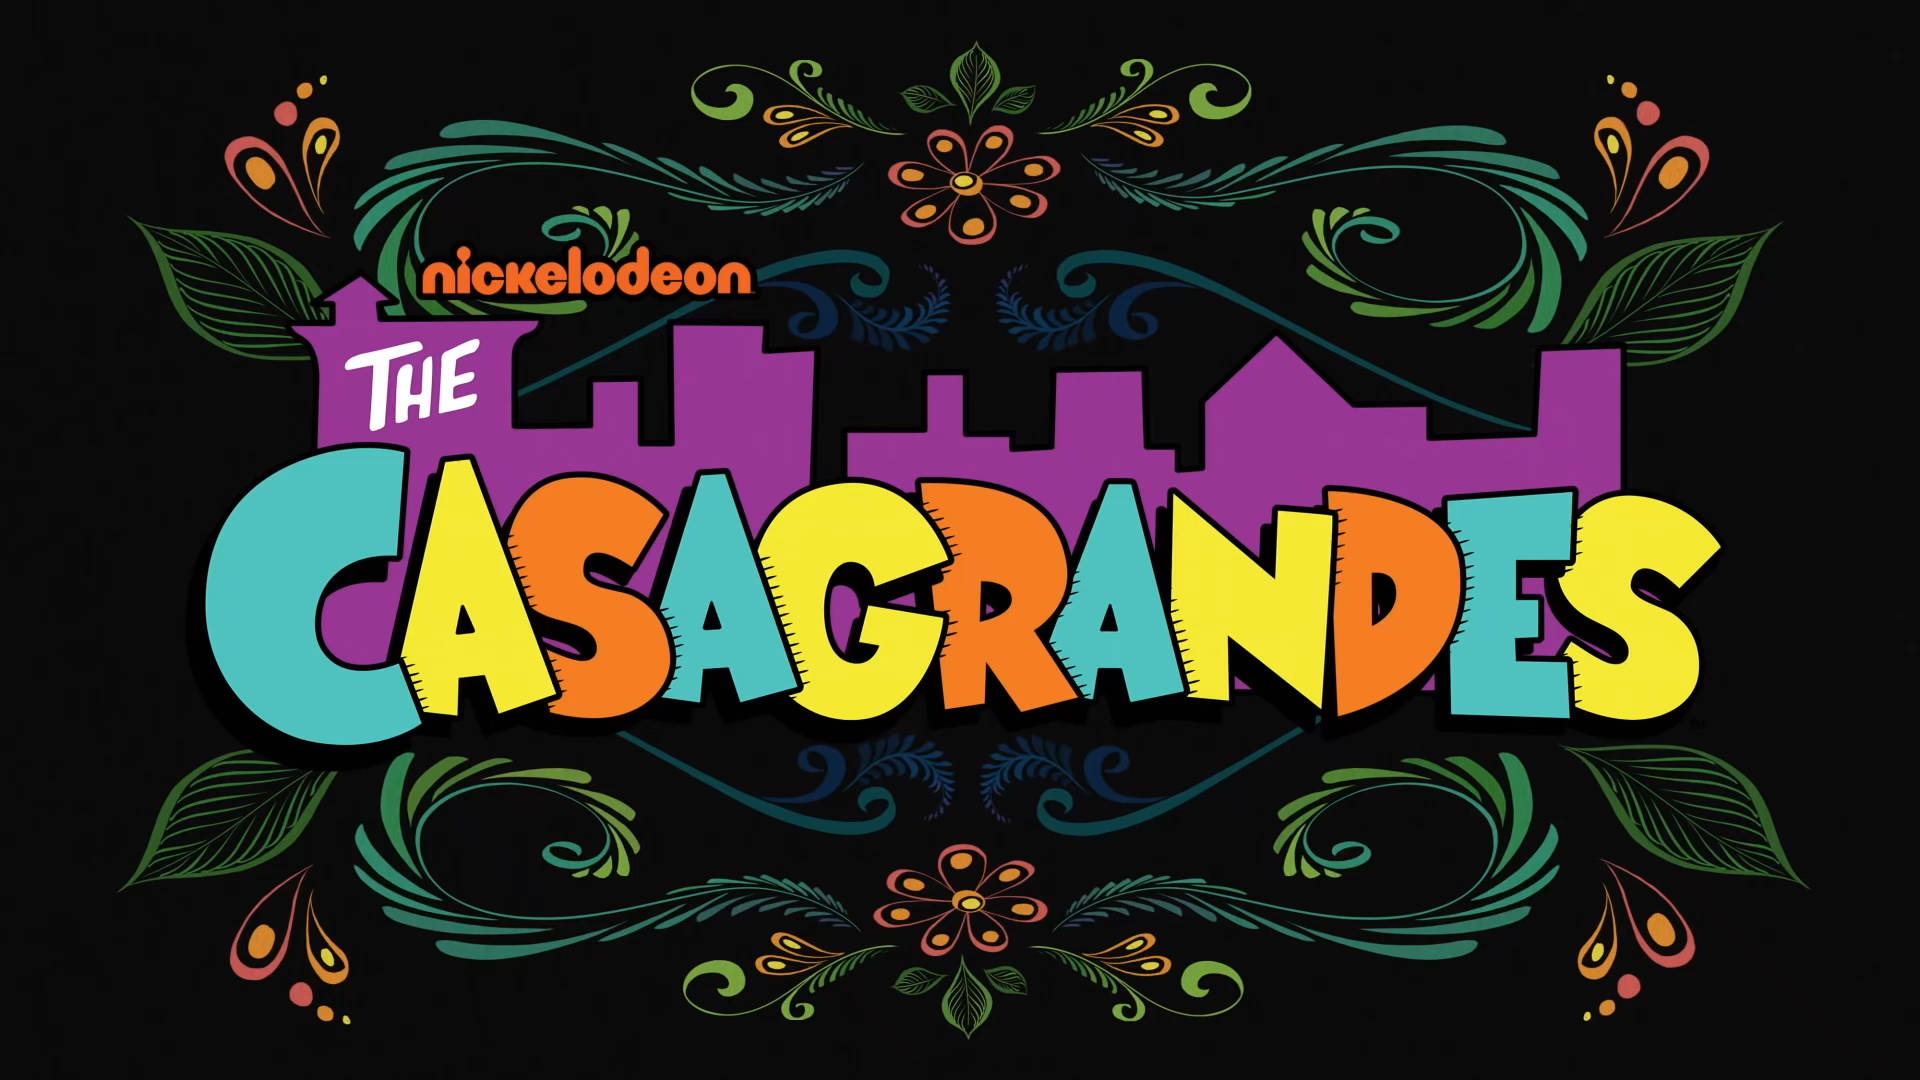 The Casagrandes Logo